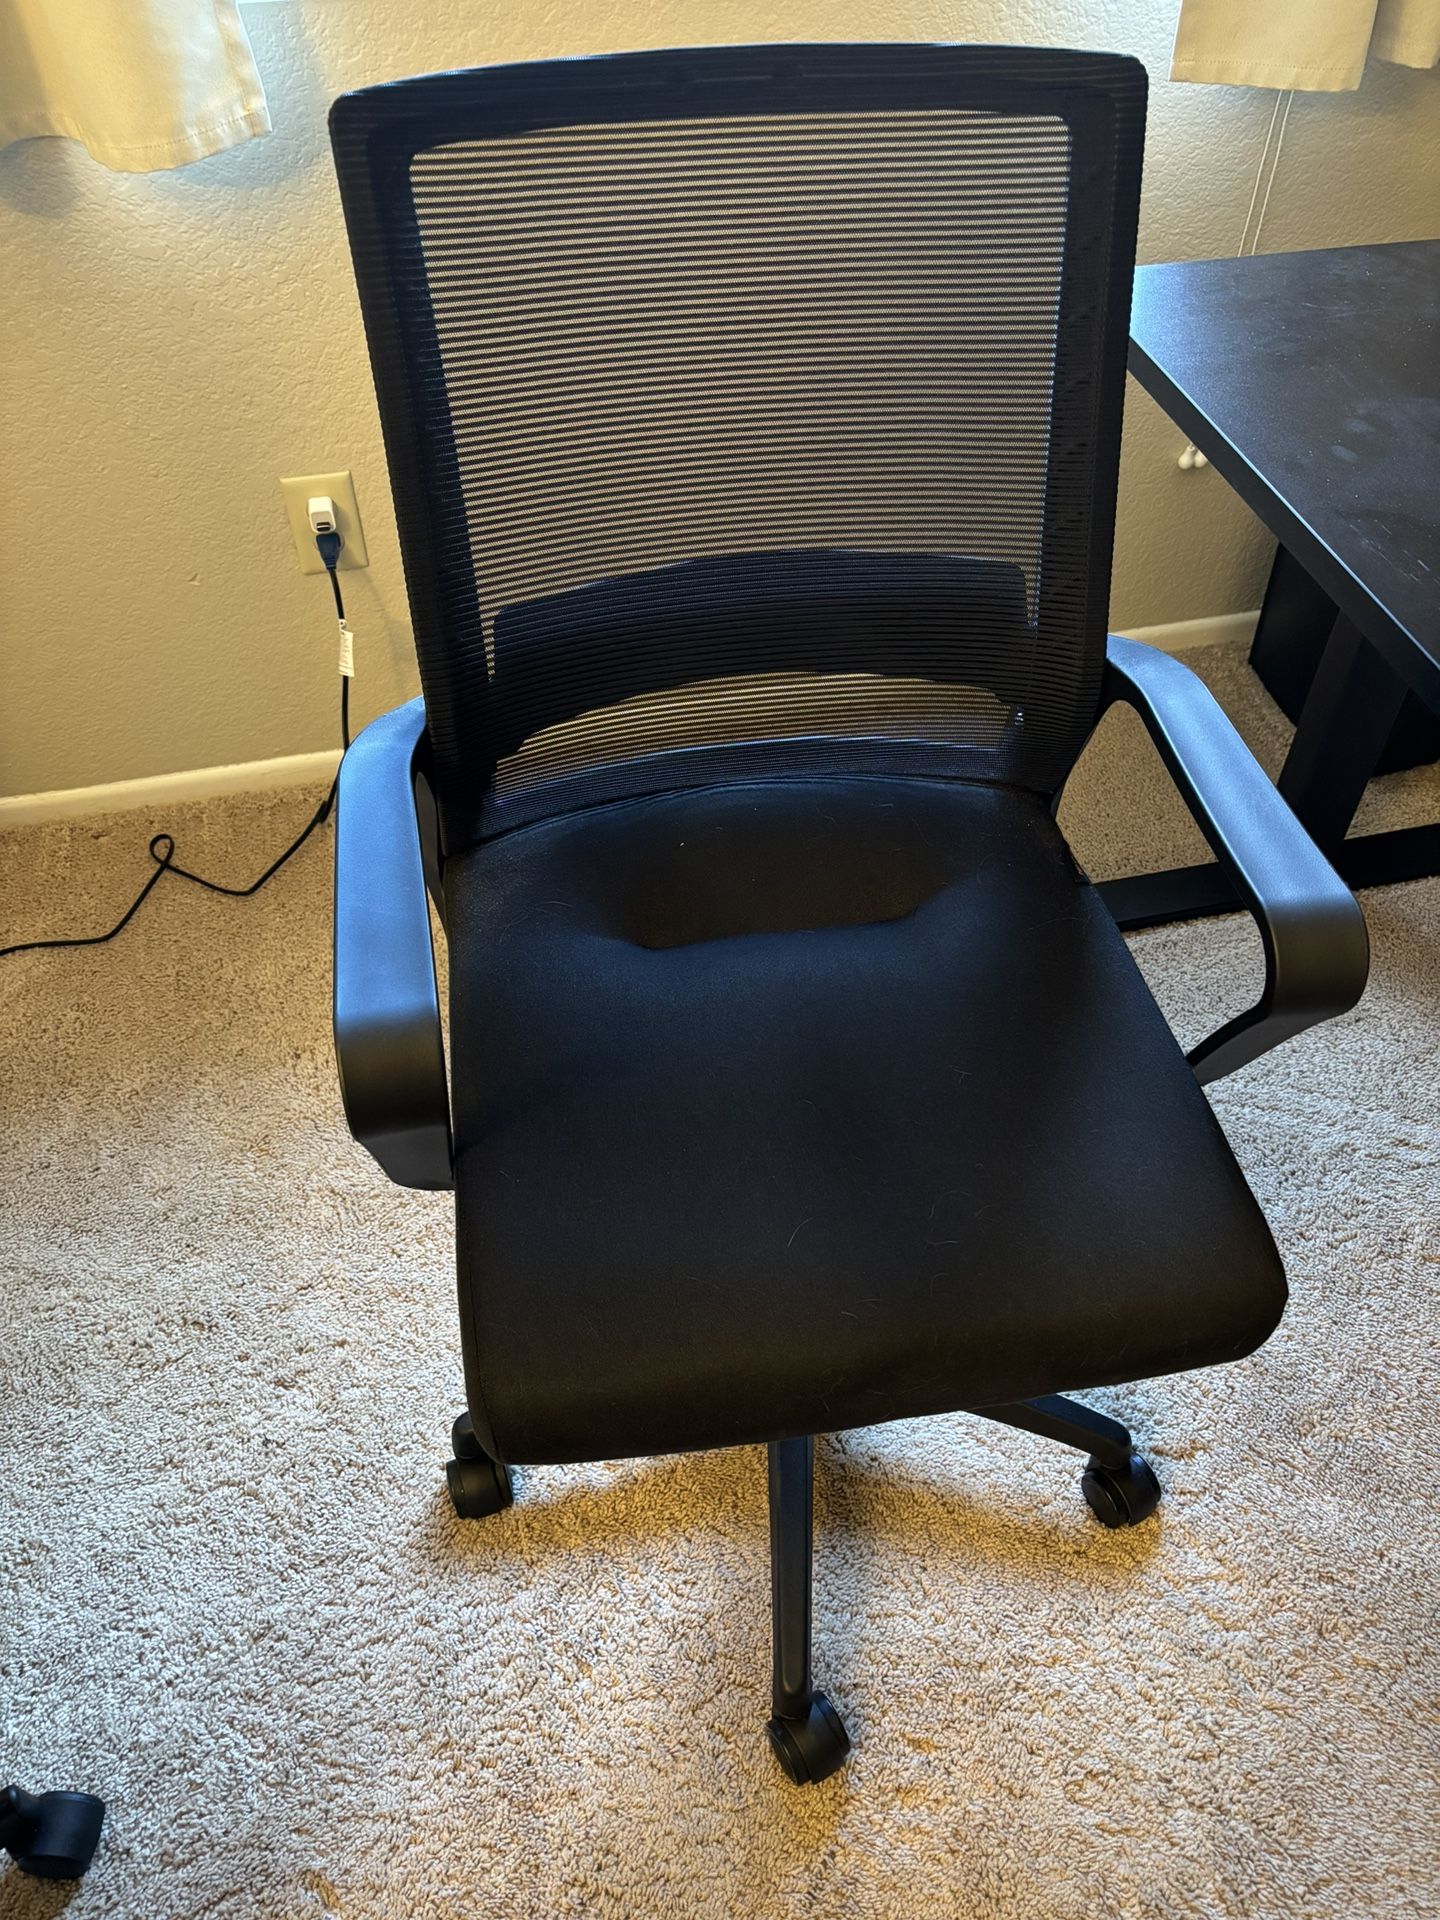 Office Chair - Black - Ergonomic